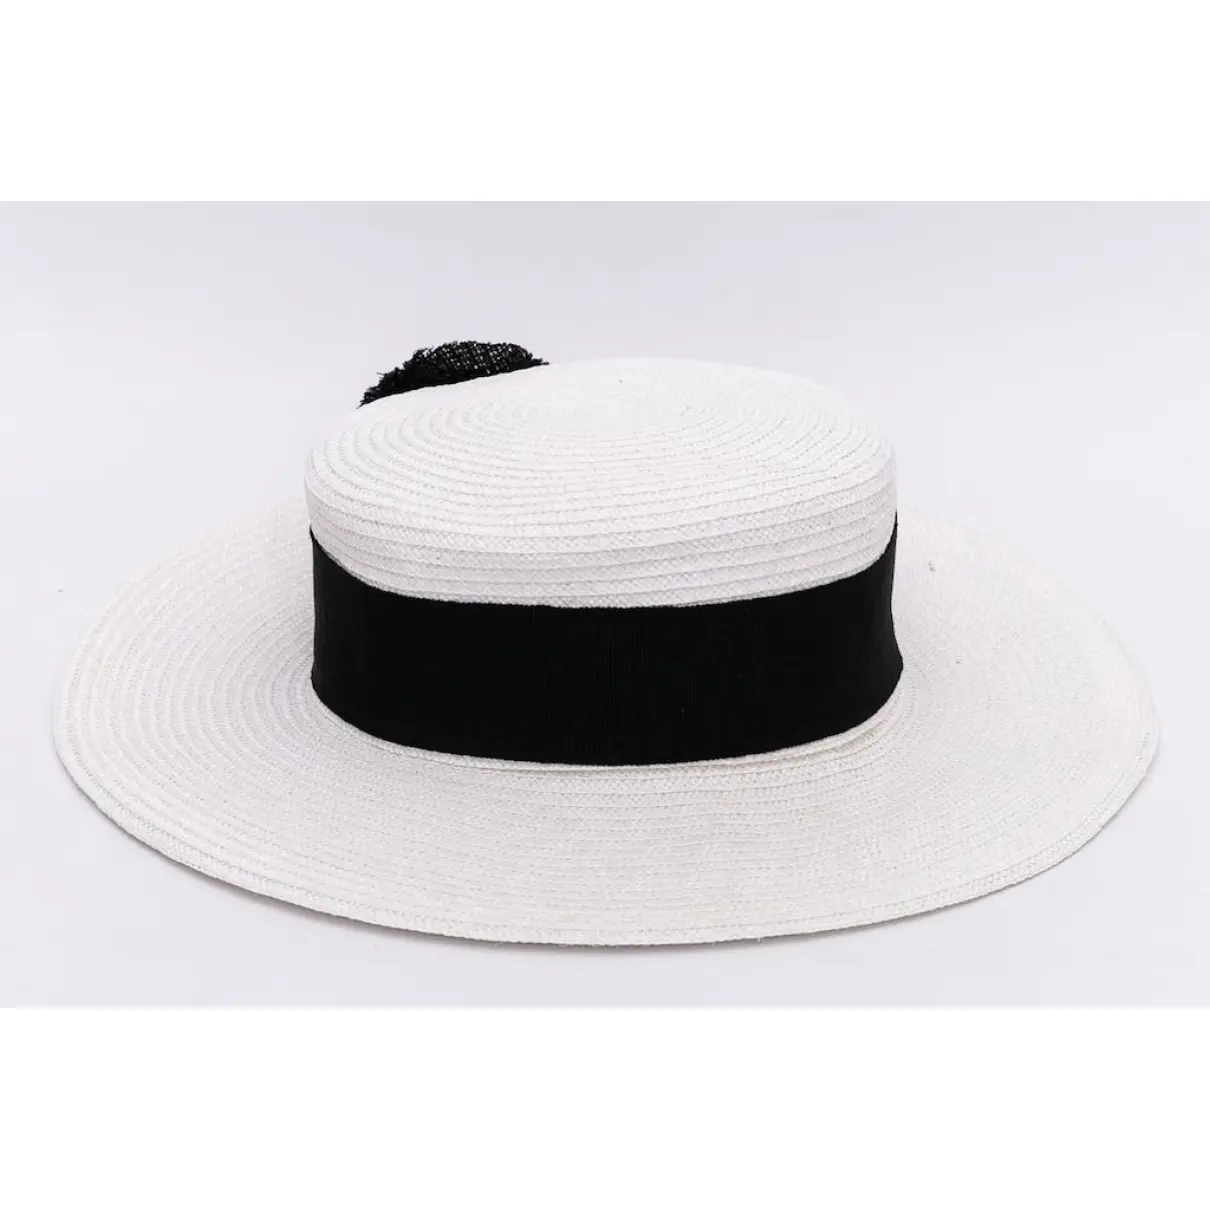 Buy Chanel Hat online